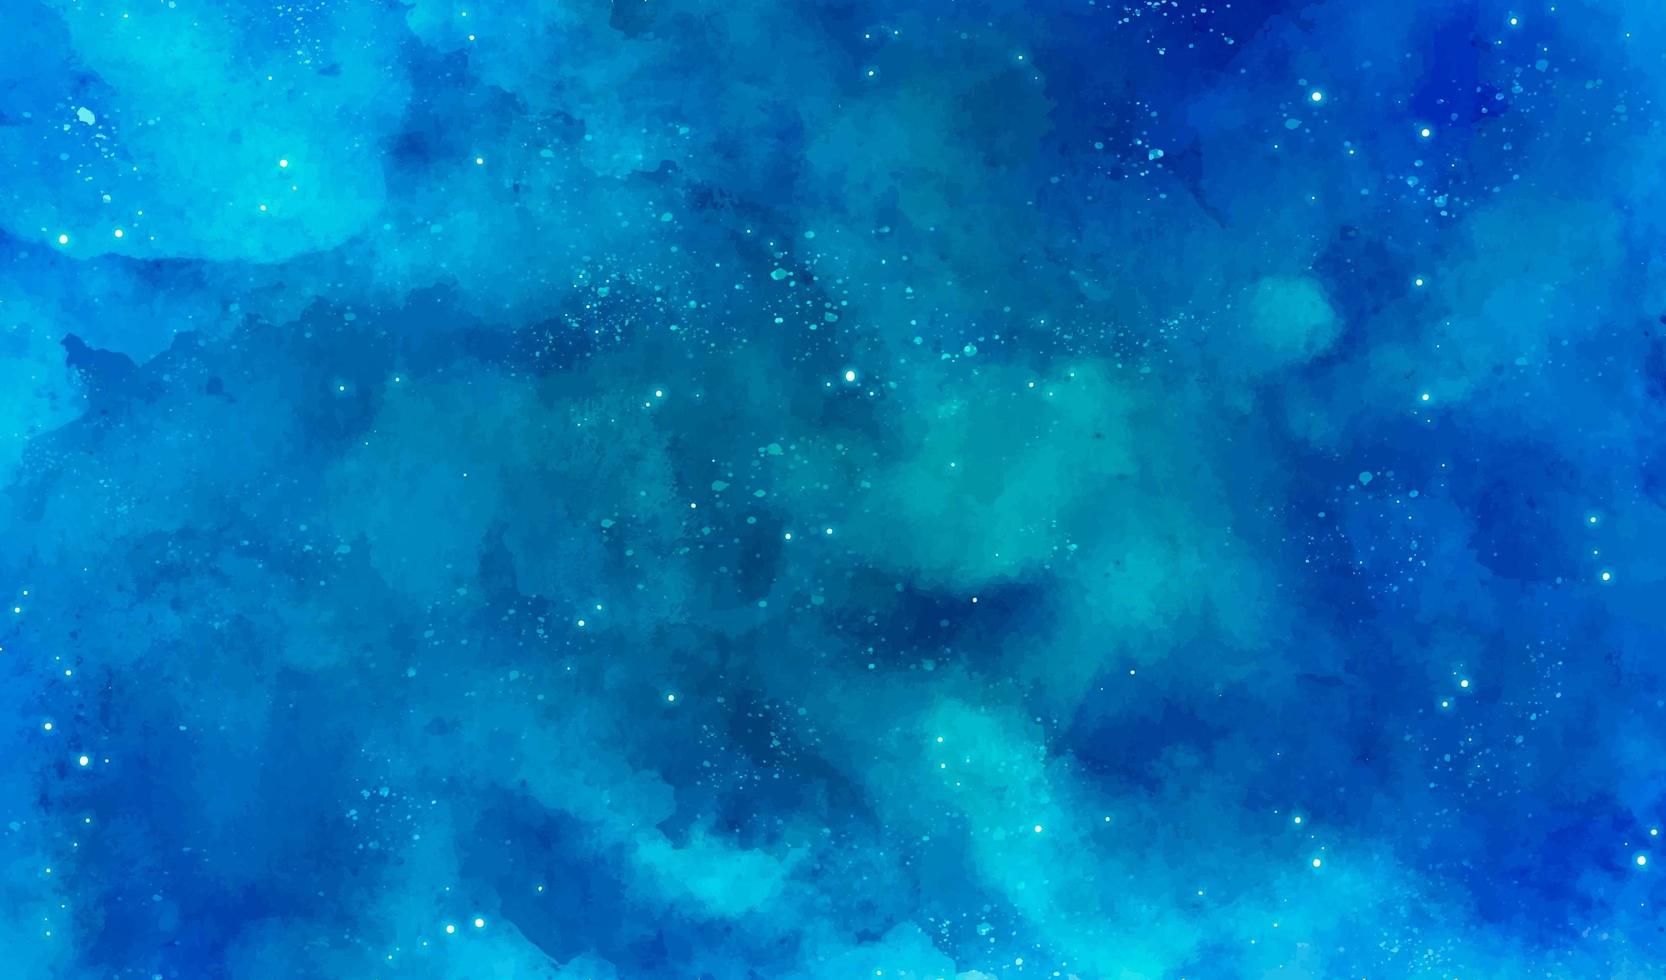 Mistic blue galaxy watercolor texture vector